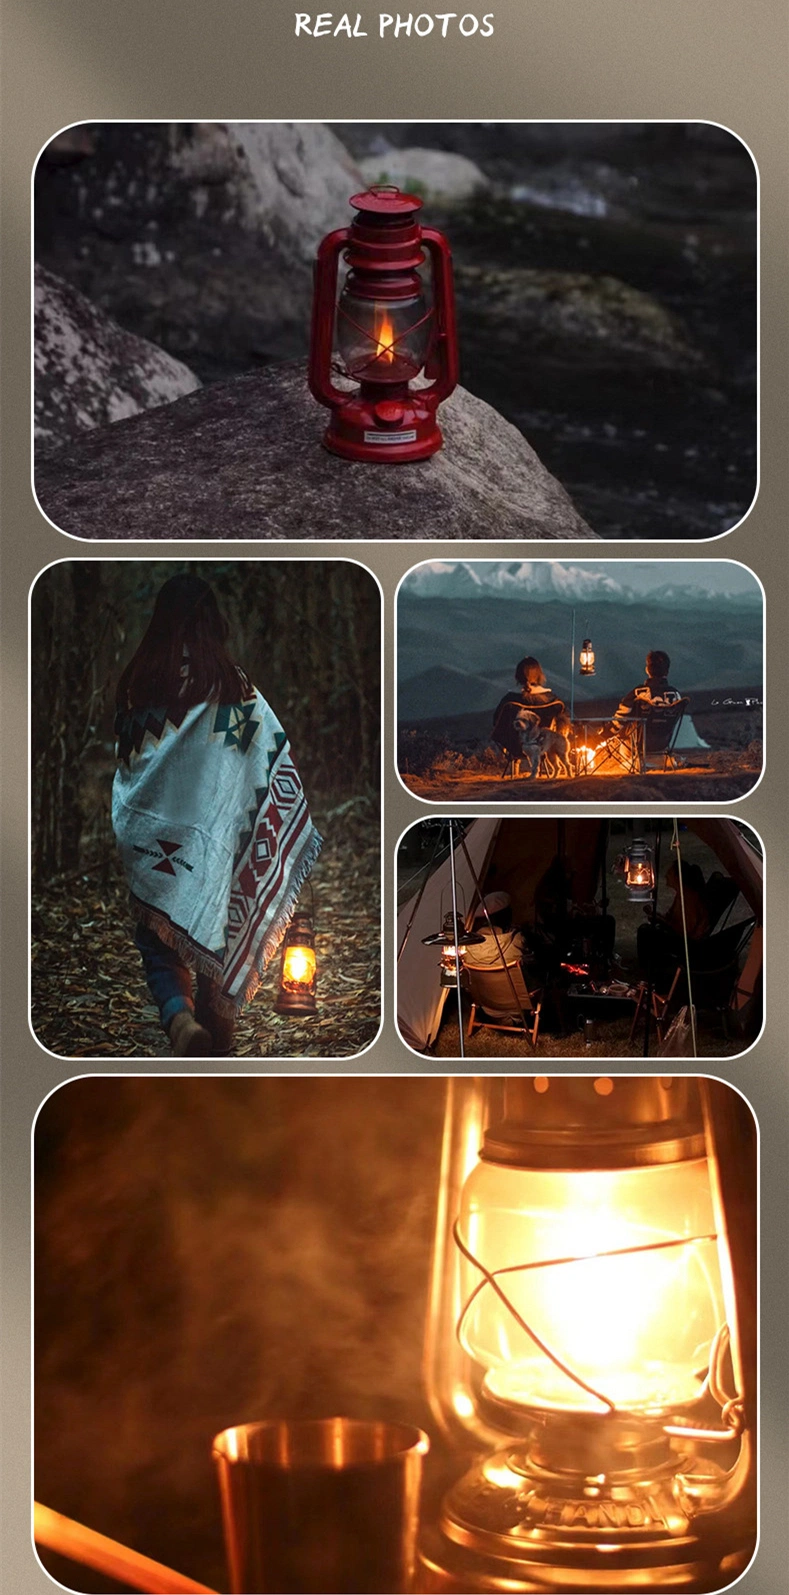 LED Retro Kerosene Outdoor Camping Atmosphere Oil Lamp Tent Laterns Camping Light